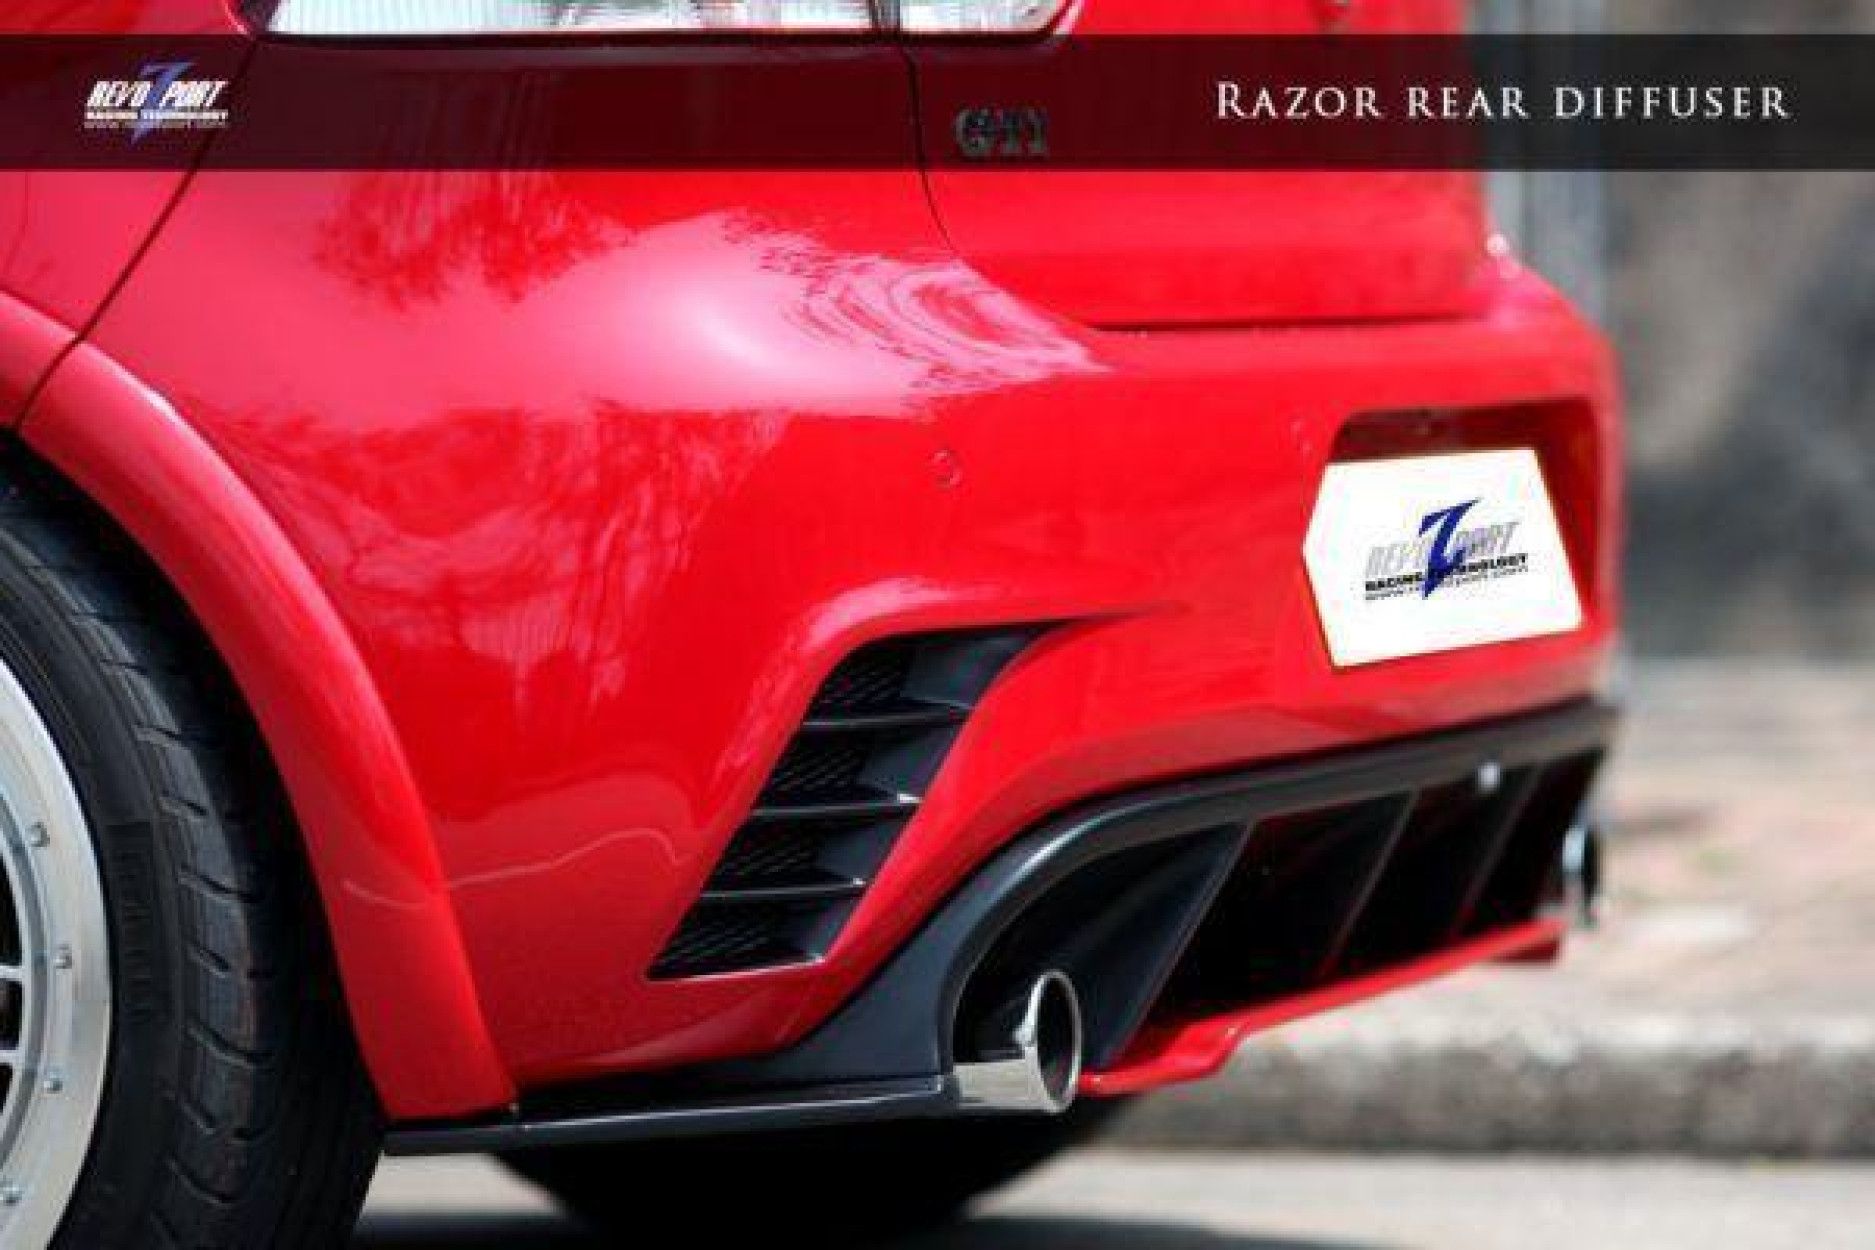 RevoZport Carbon diffuser for Volkswagen Golf MK6|Golf 6 GTI "Razor" (3) 